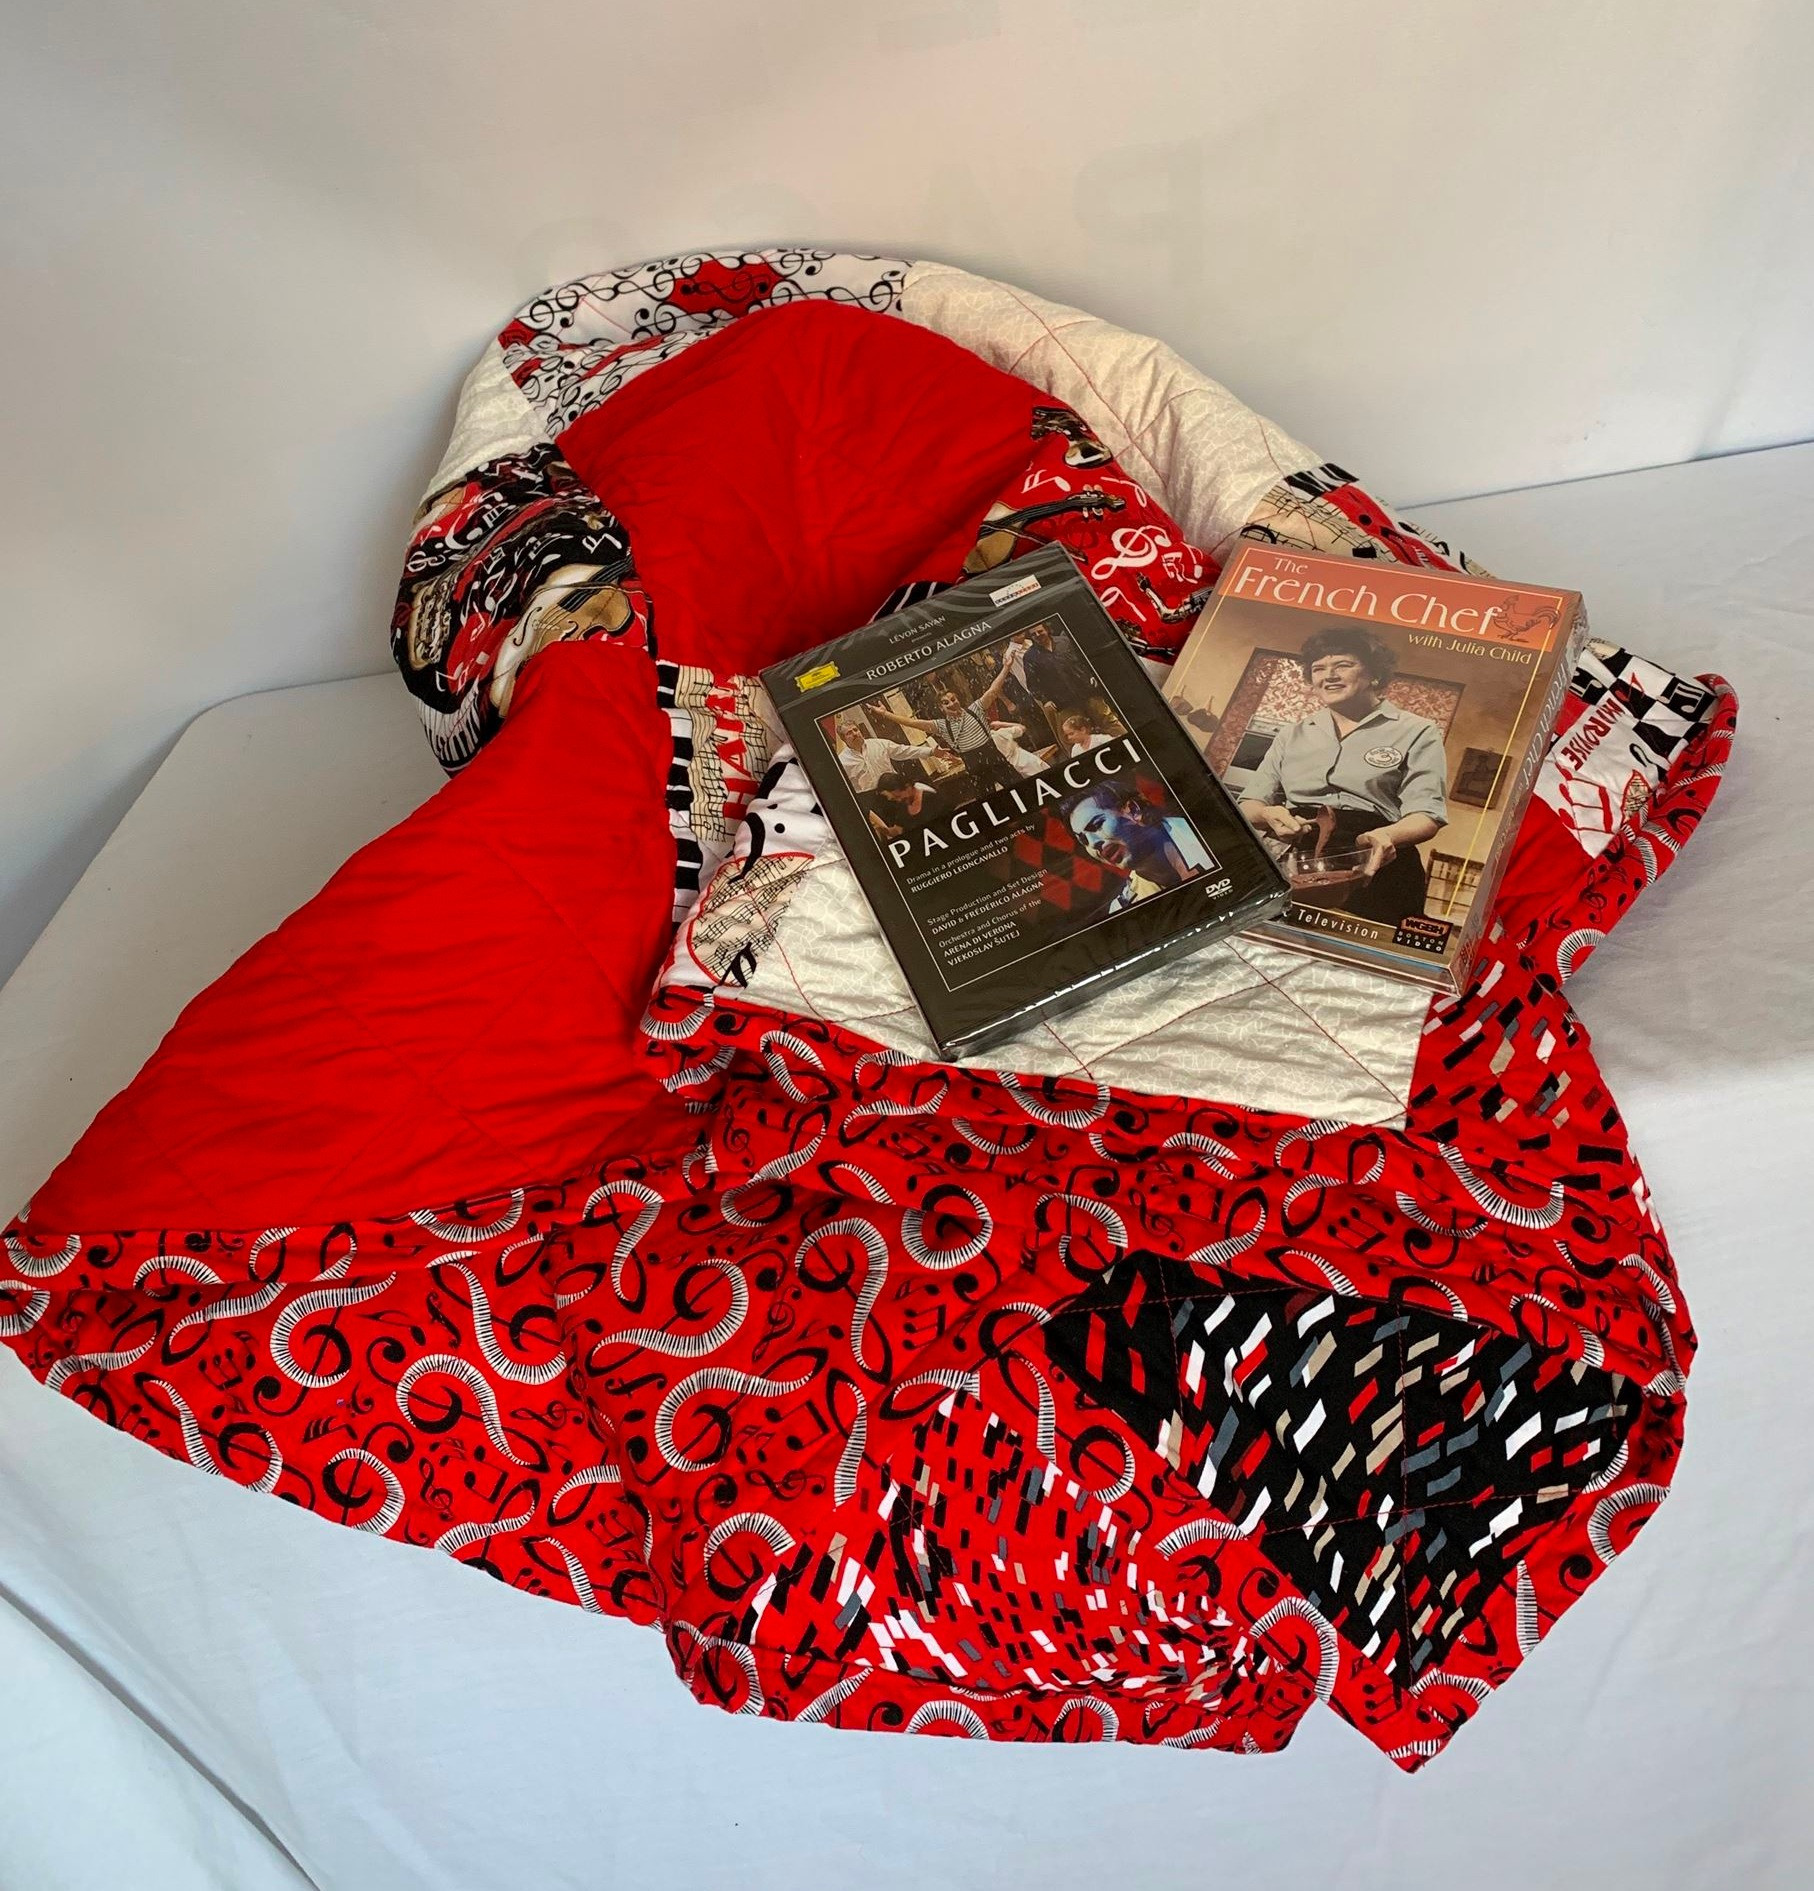 Handmade Music Themed Quilt & Pagliacci, Julia Child DVD & Tickets